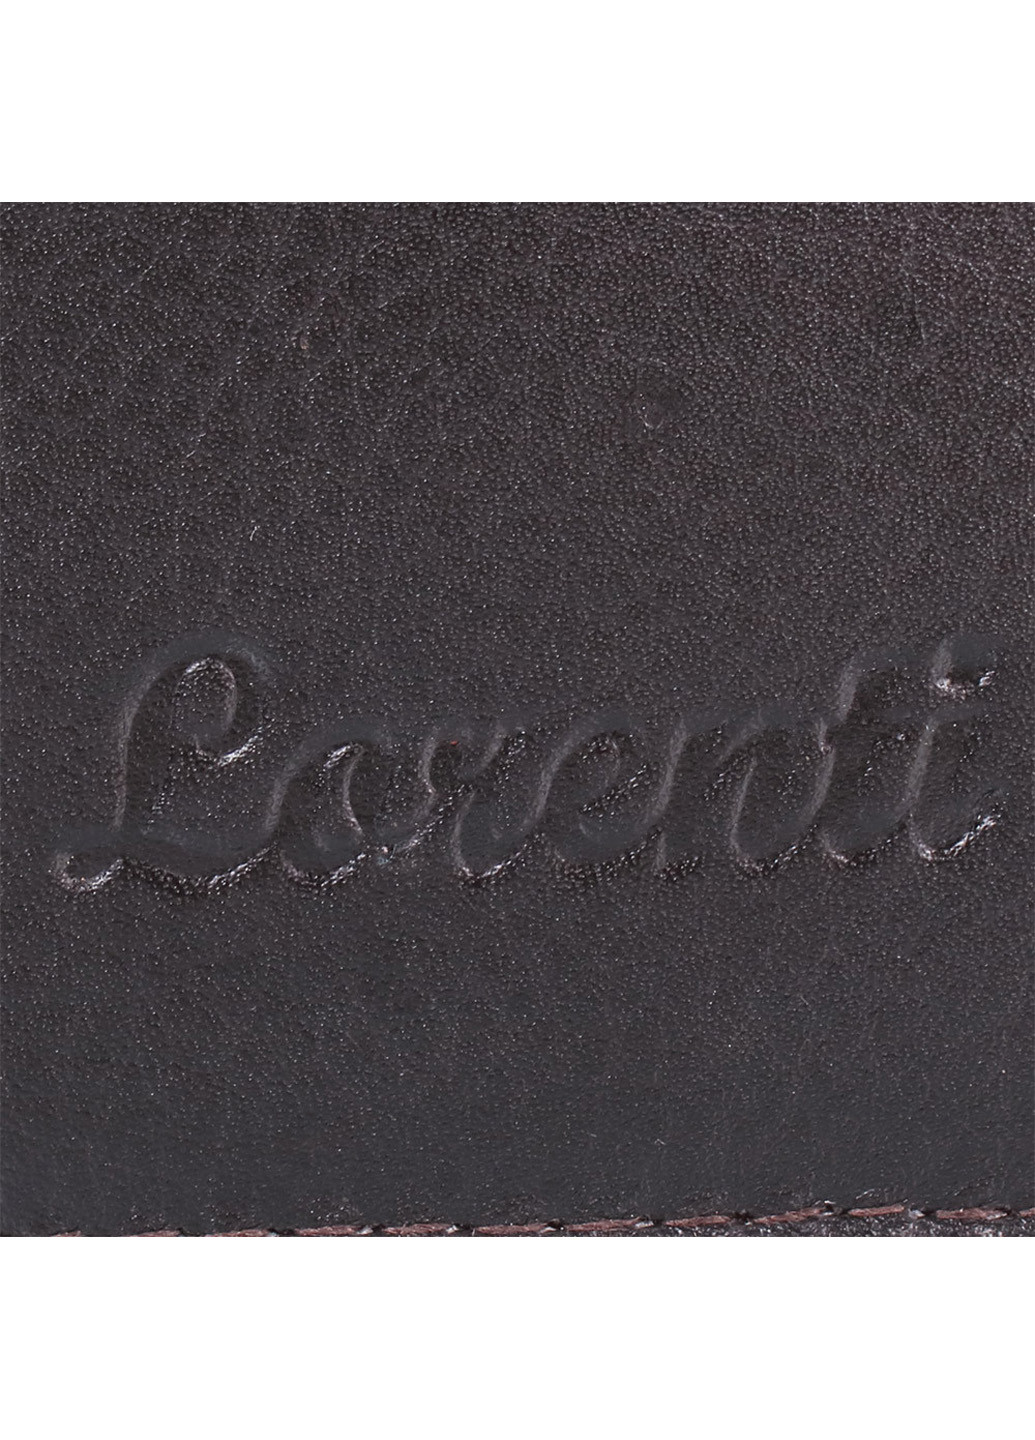 Женский кожаный кошелек 8,5х11,5х2,5 см Lorenti (195538820)